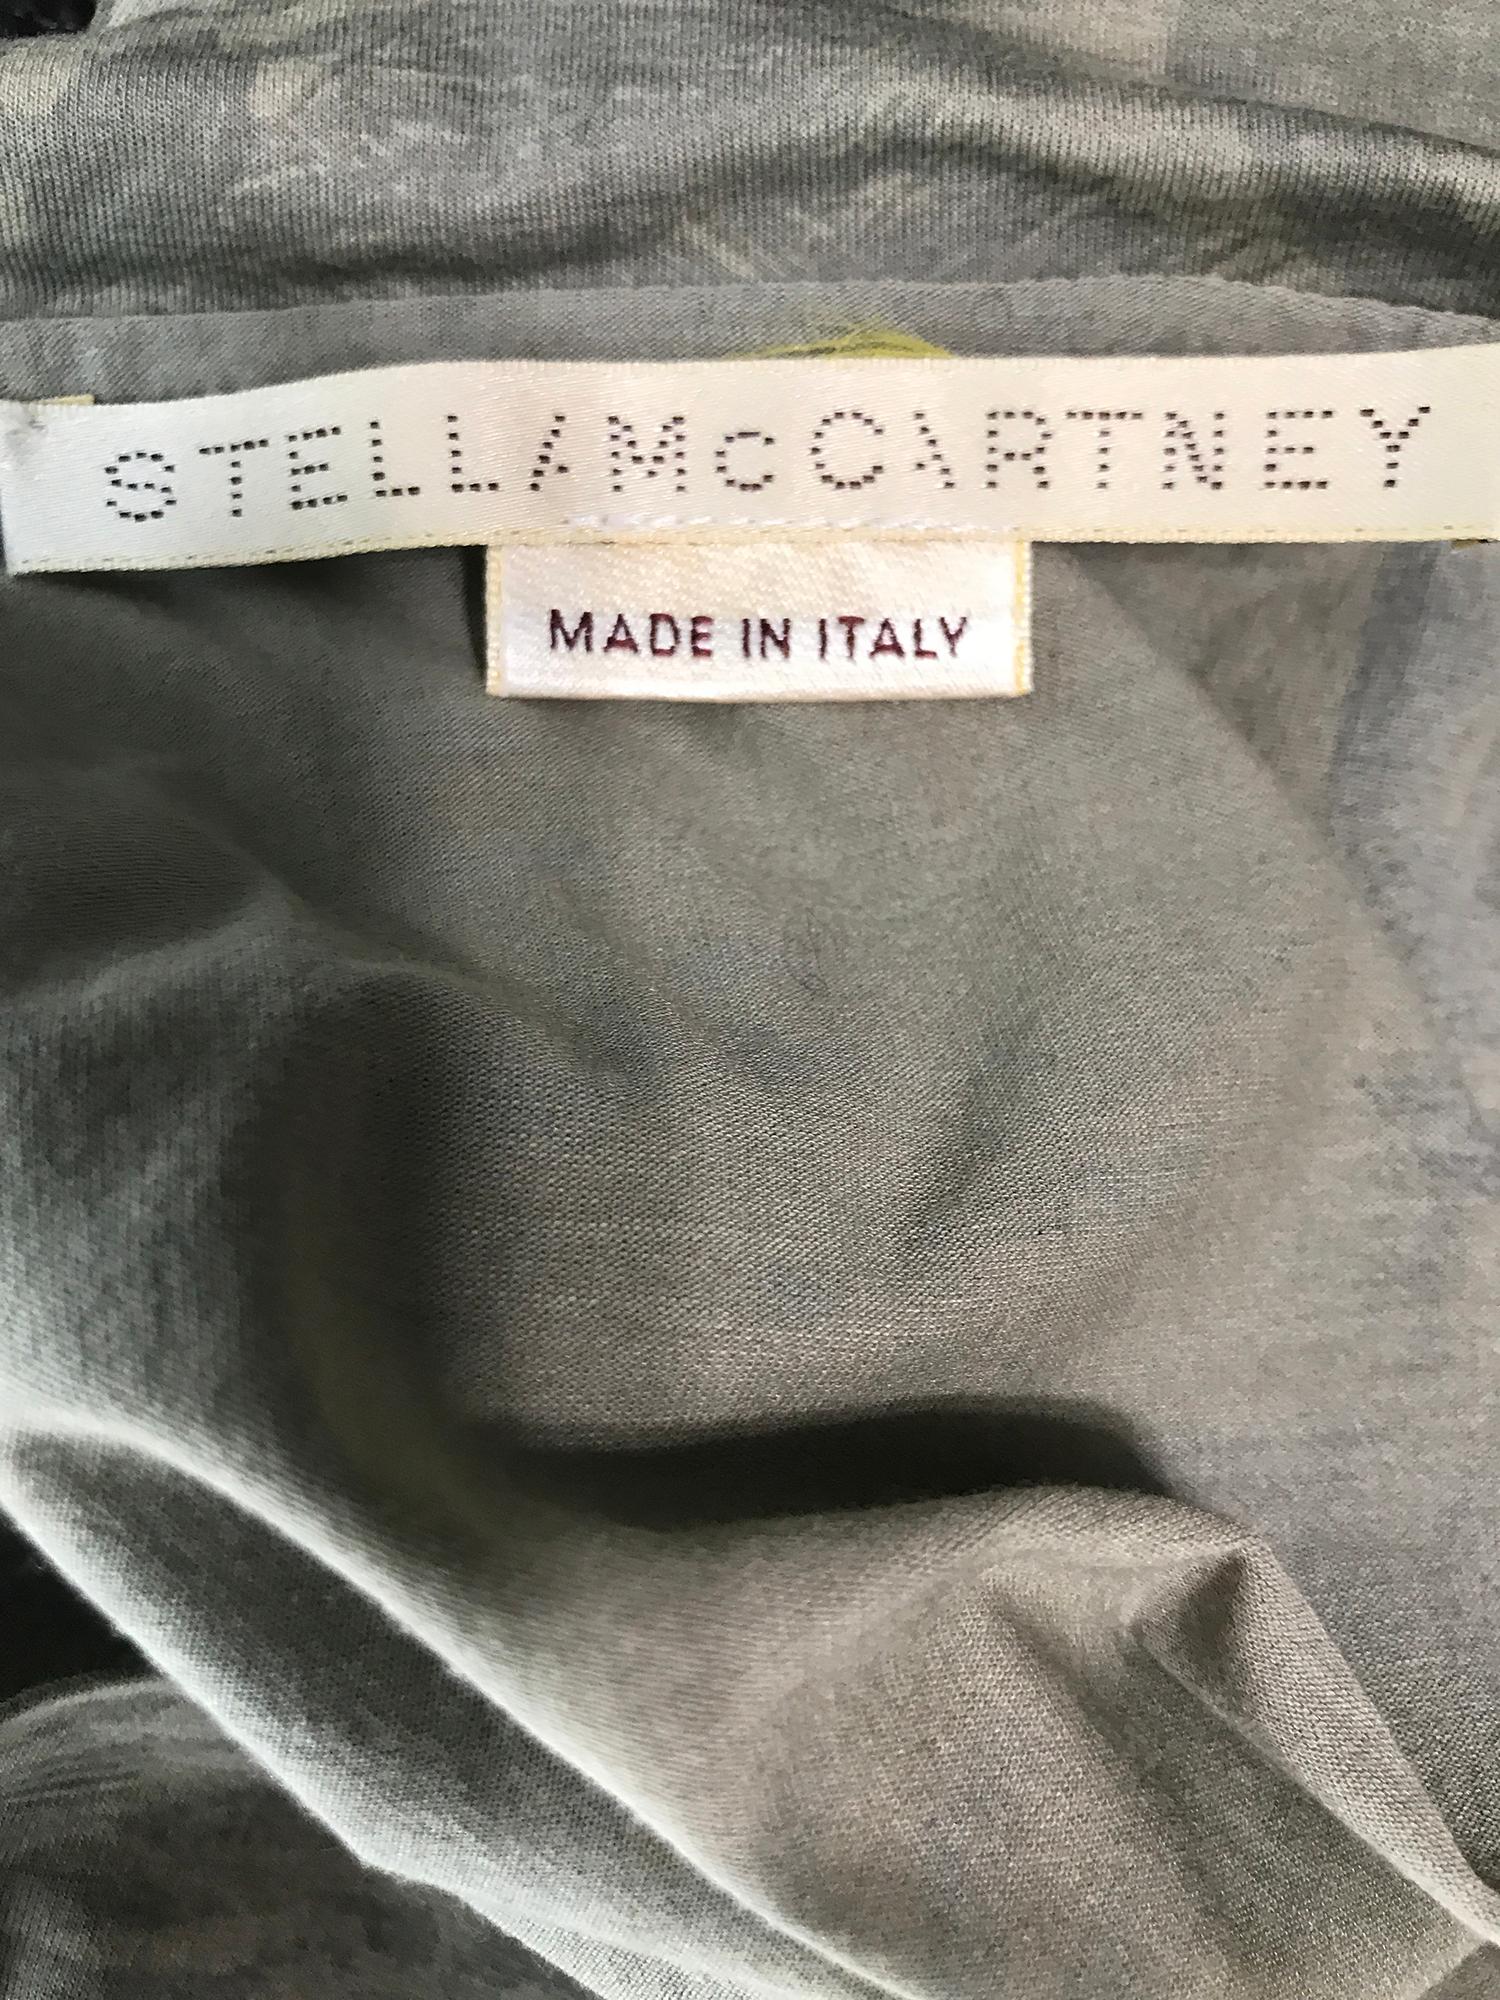 Stella McCartney Photo Print Sage Green Skirt and Wrap Sweater Set  6